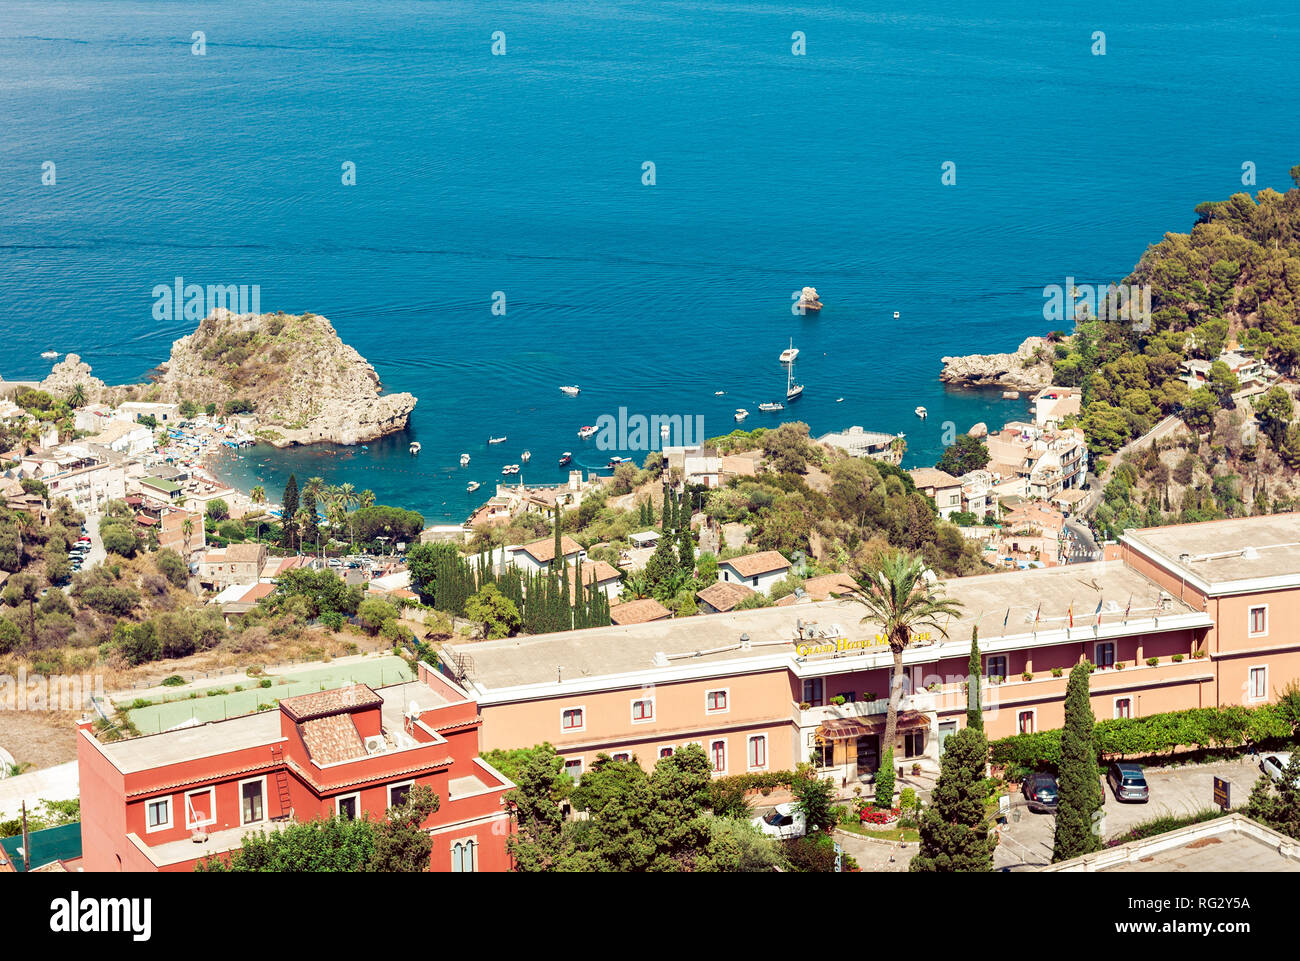 View of the island Isola Bella from Taormina, Sicily, Italy Stock Photo